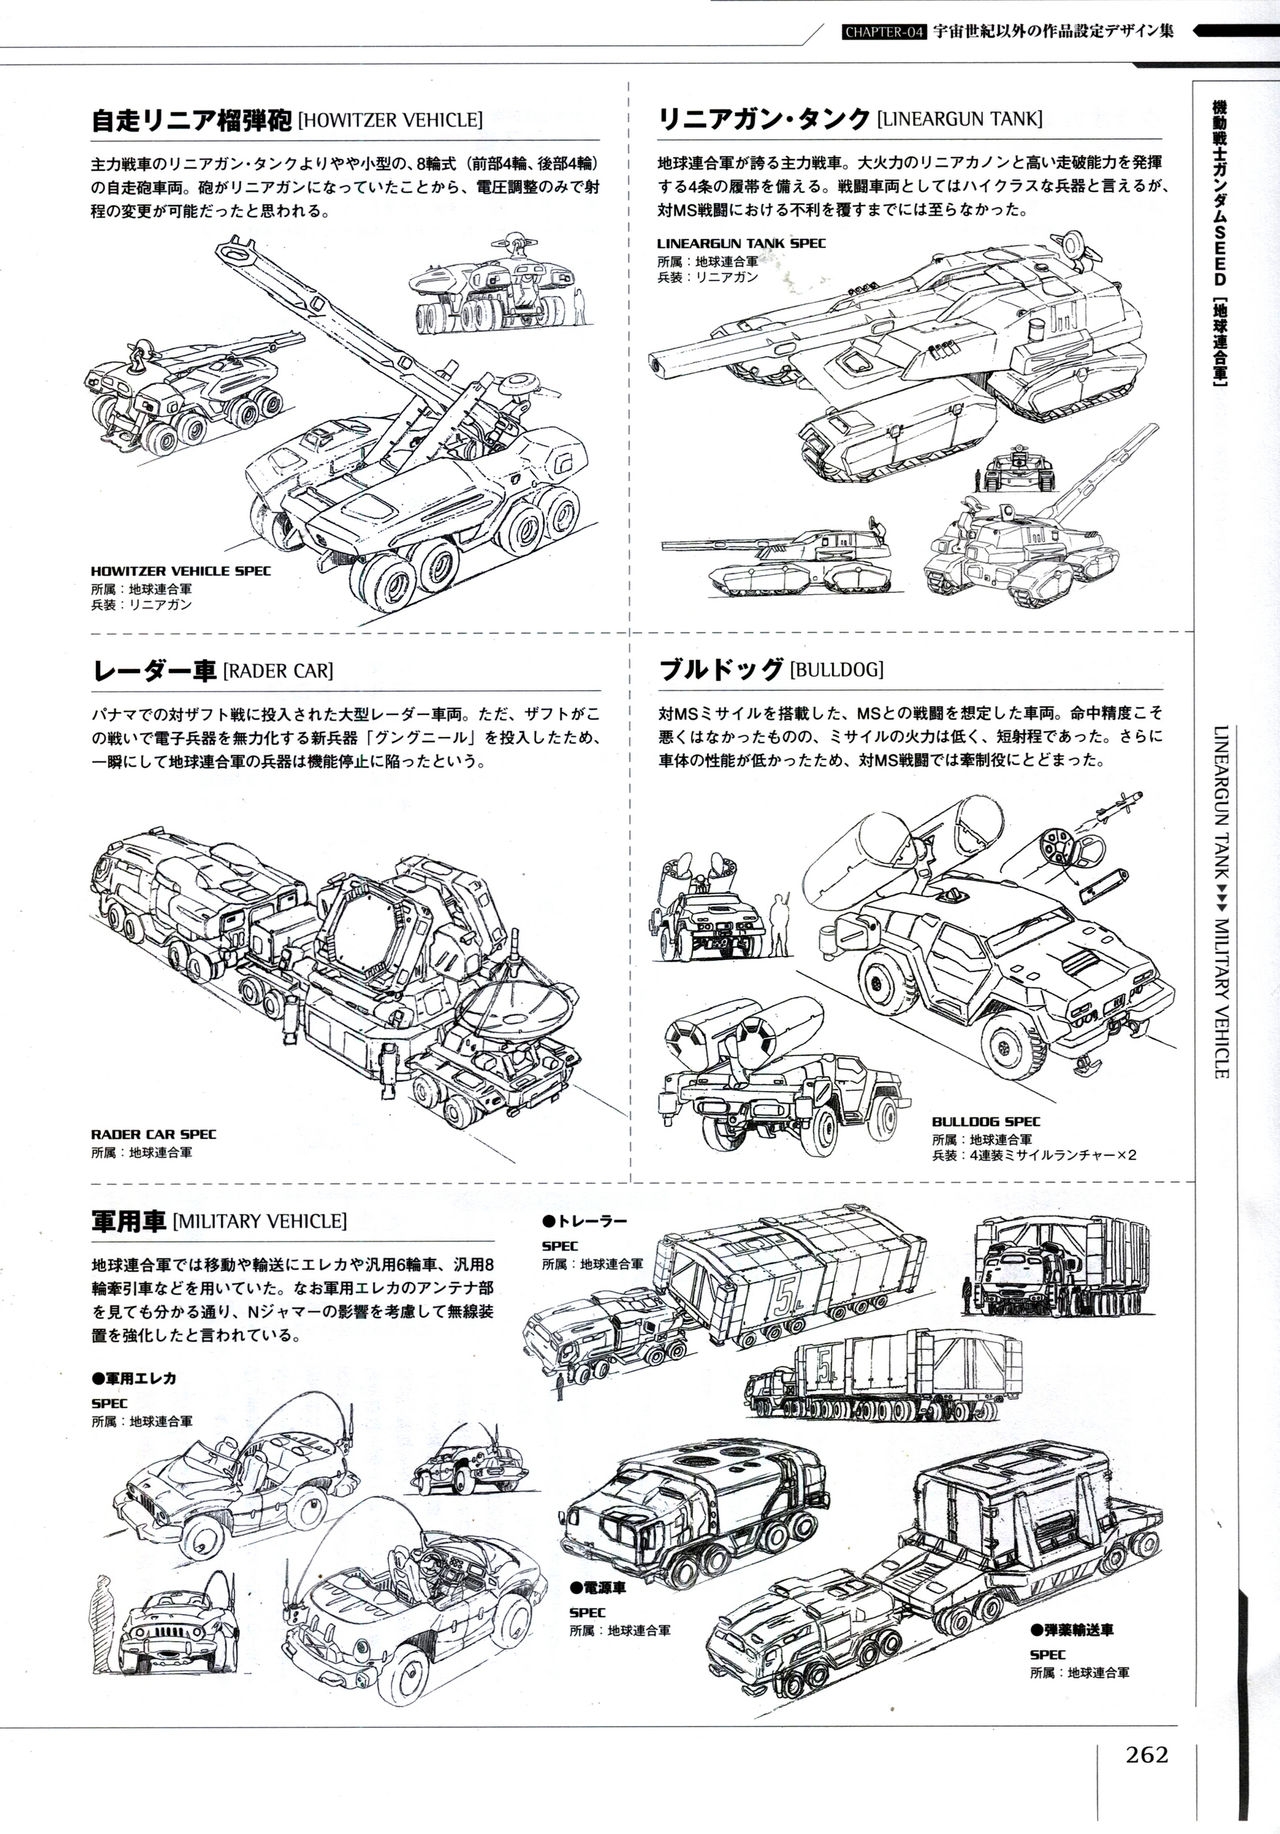 Mobile Suit Gundam - Ship & Aerospace Plane Encyclopedia - Revised Edition 267